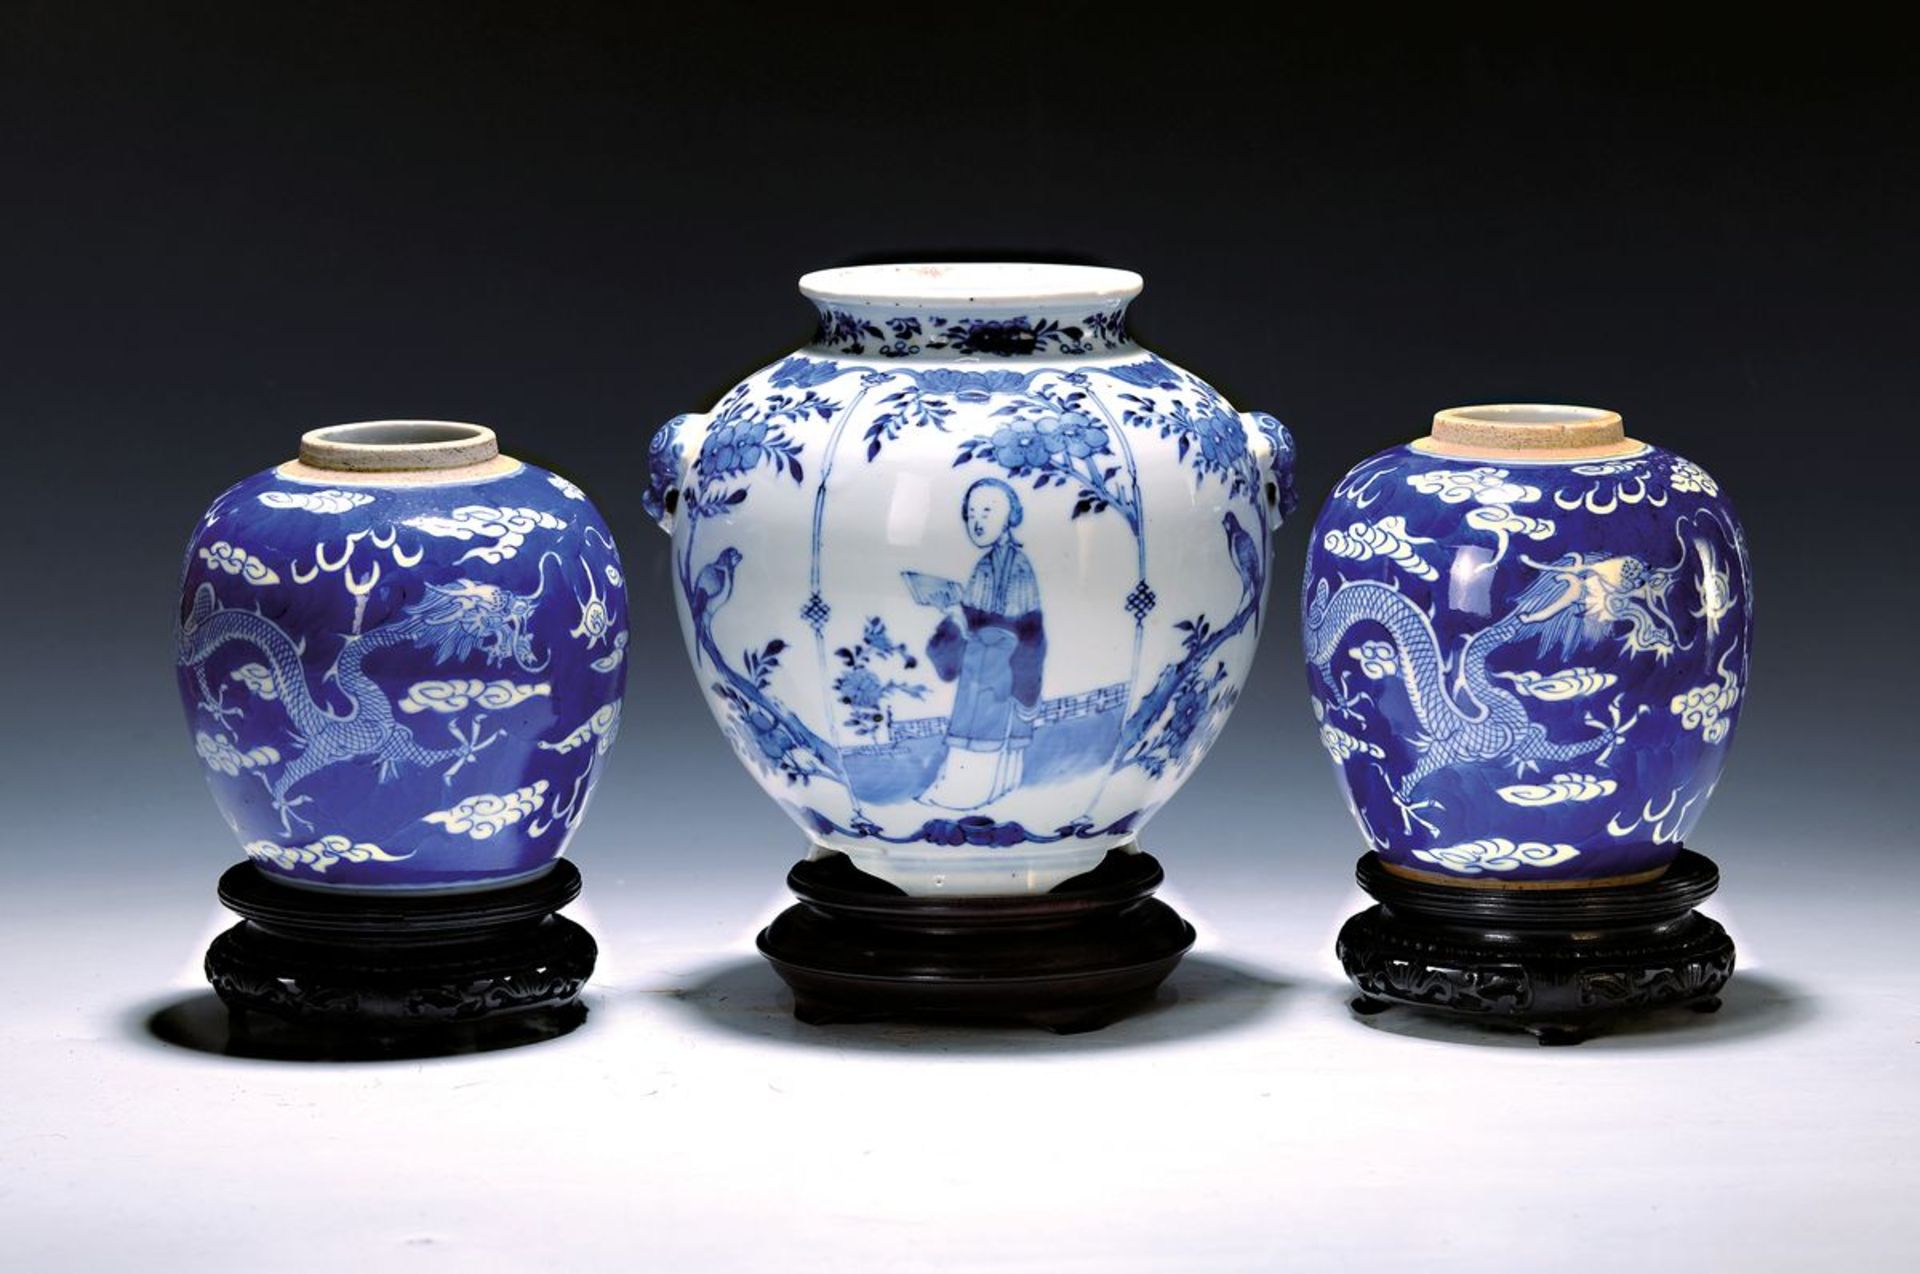 Drei Vasen, China, um 1900, 1. Vasenpaar mit Kangxi